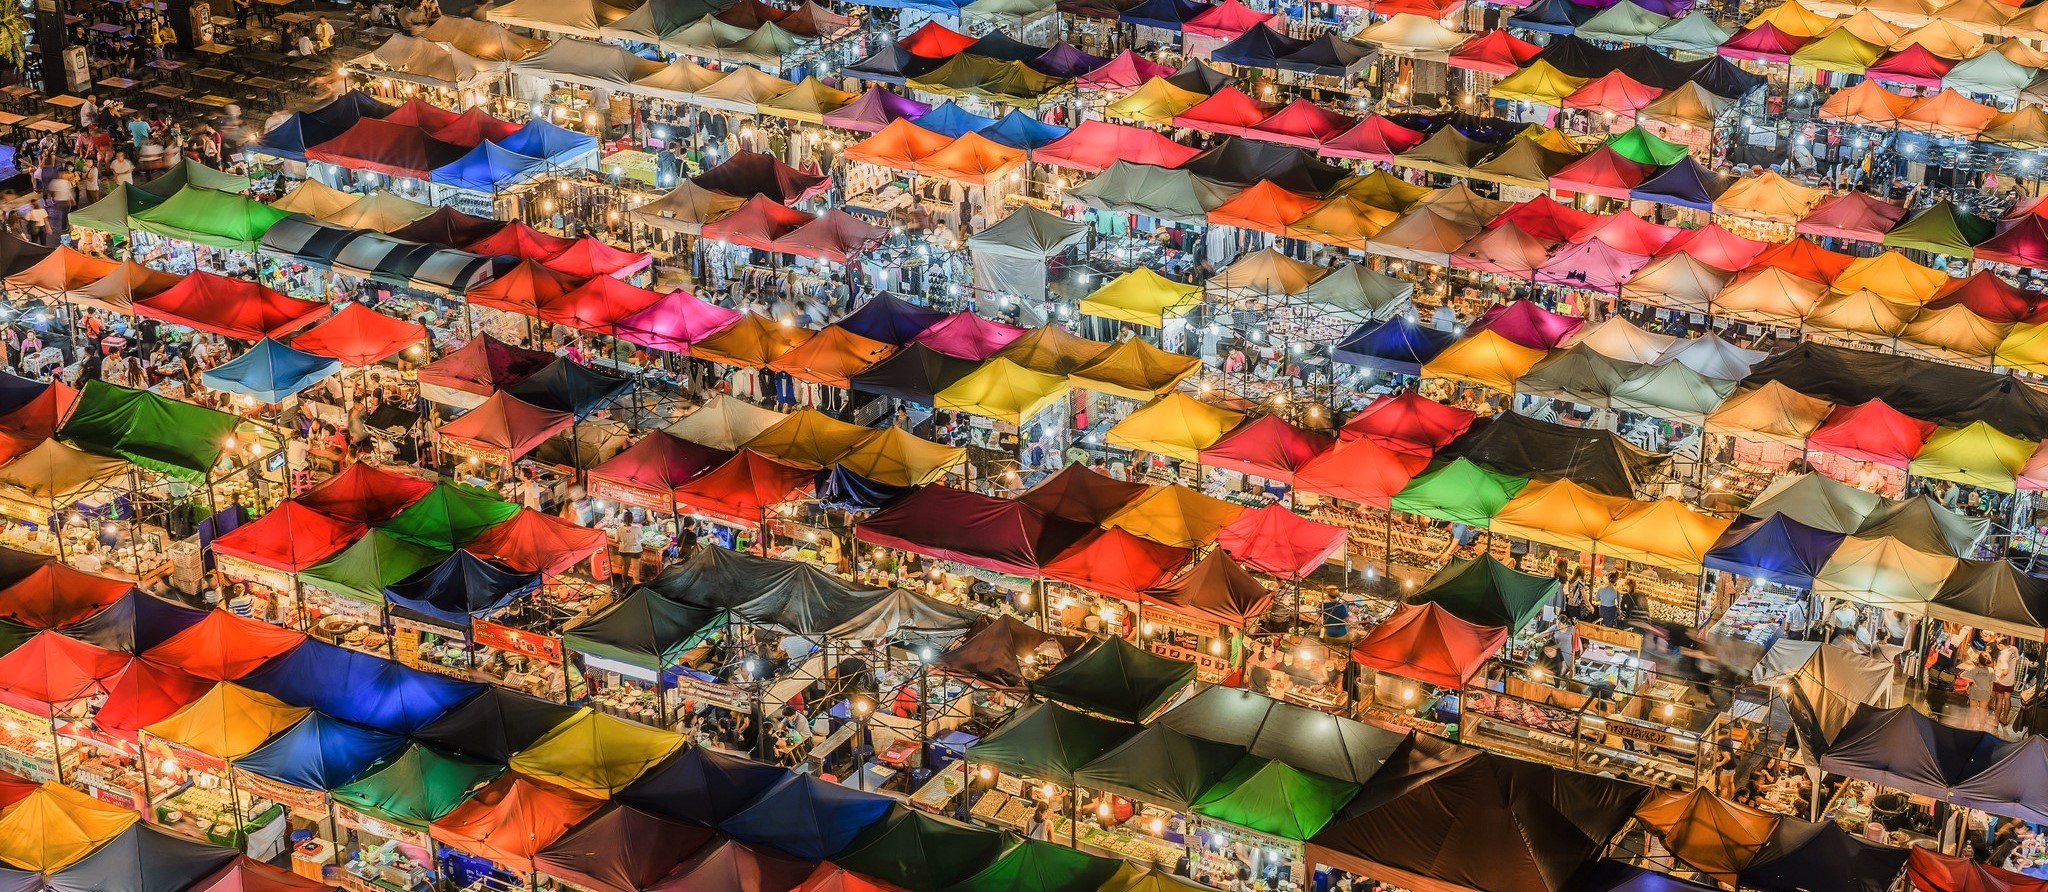 A night market in Bangkok, April 2017 (Photo: Getty Images/Aotaro)